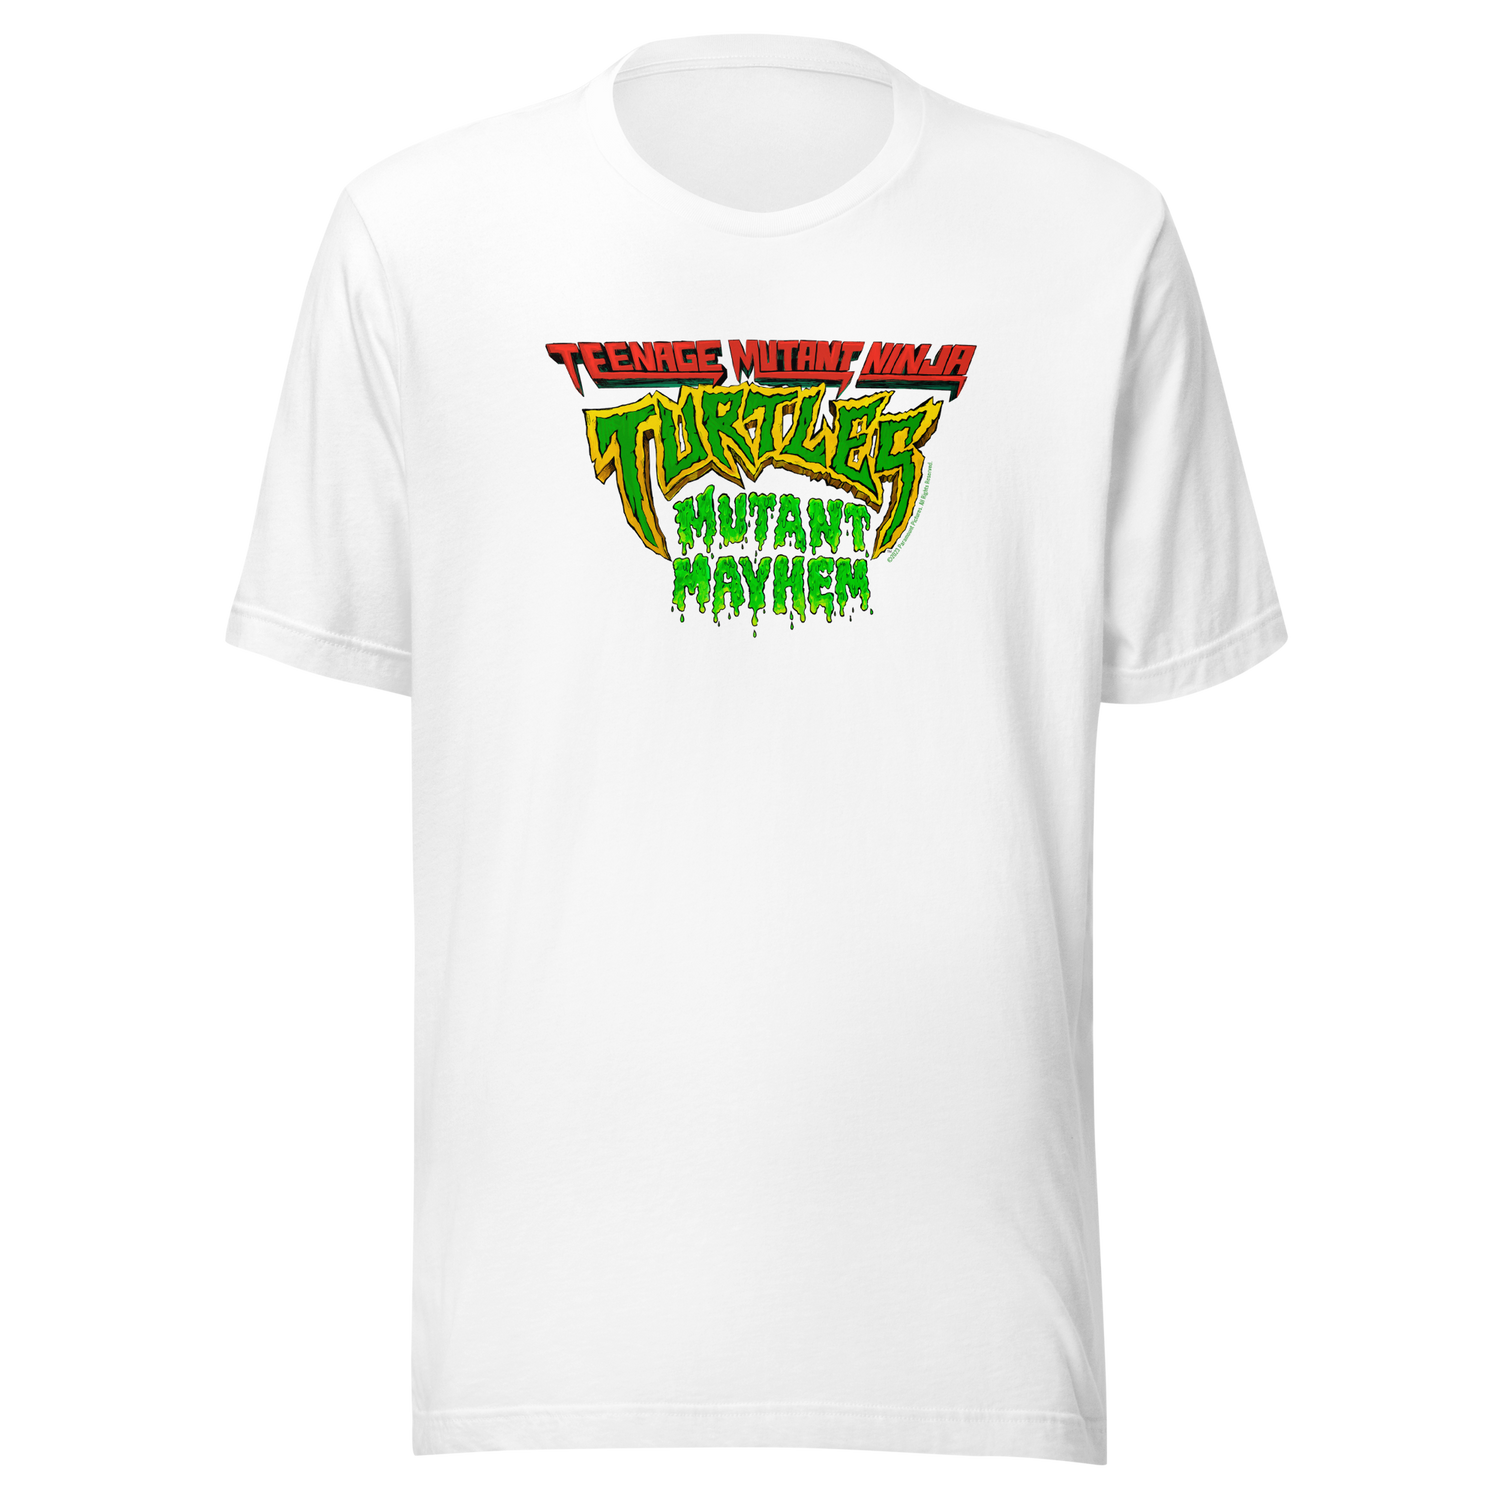  Teenage Mutant Ninja Turtles T-Shirt 2 Pack Kids Grey Black Top  : Clothing, Shoes & Jewelry